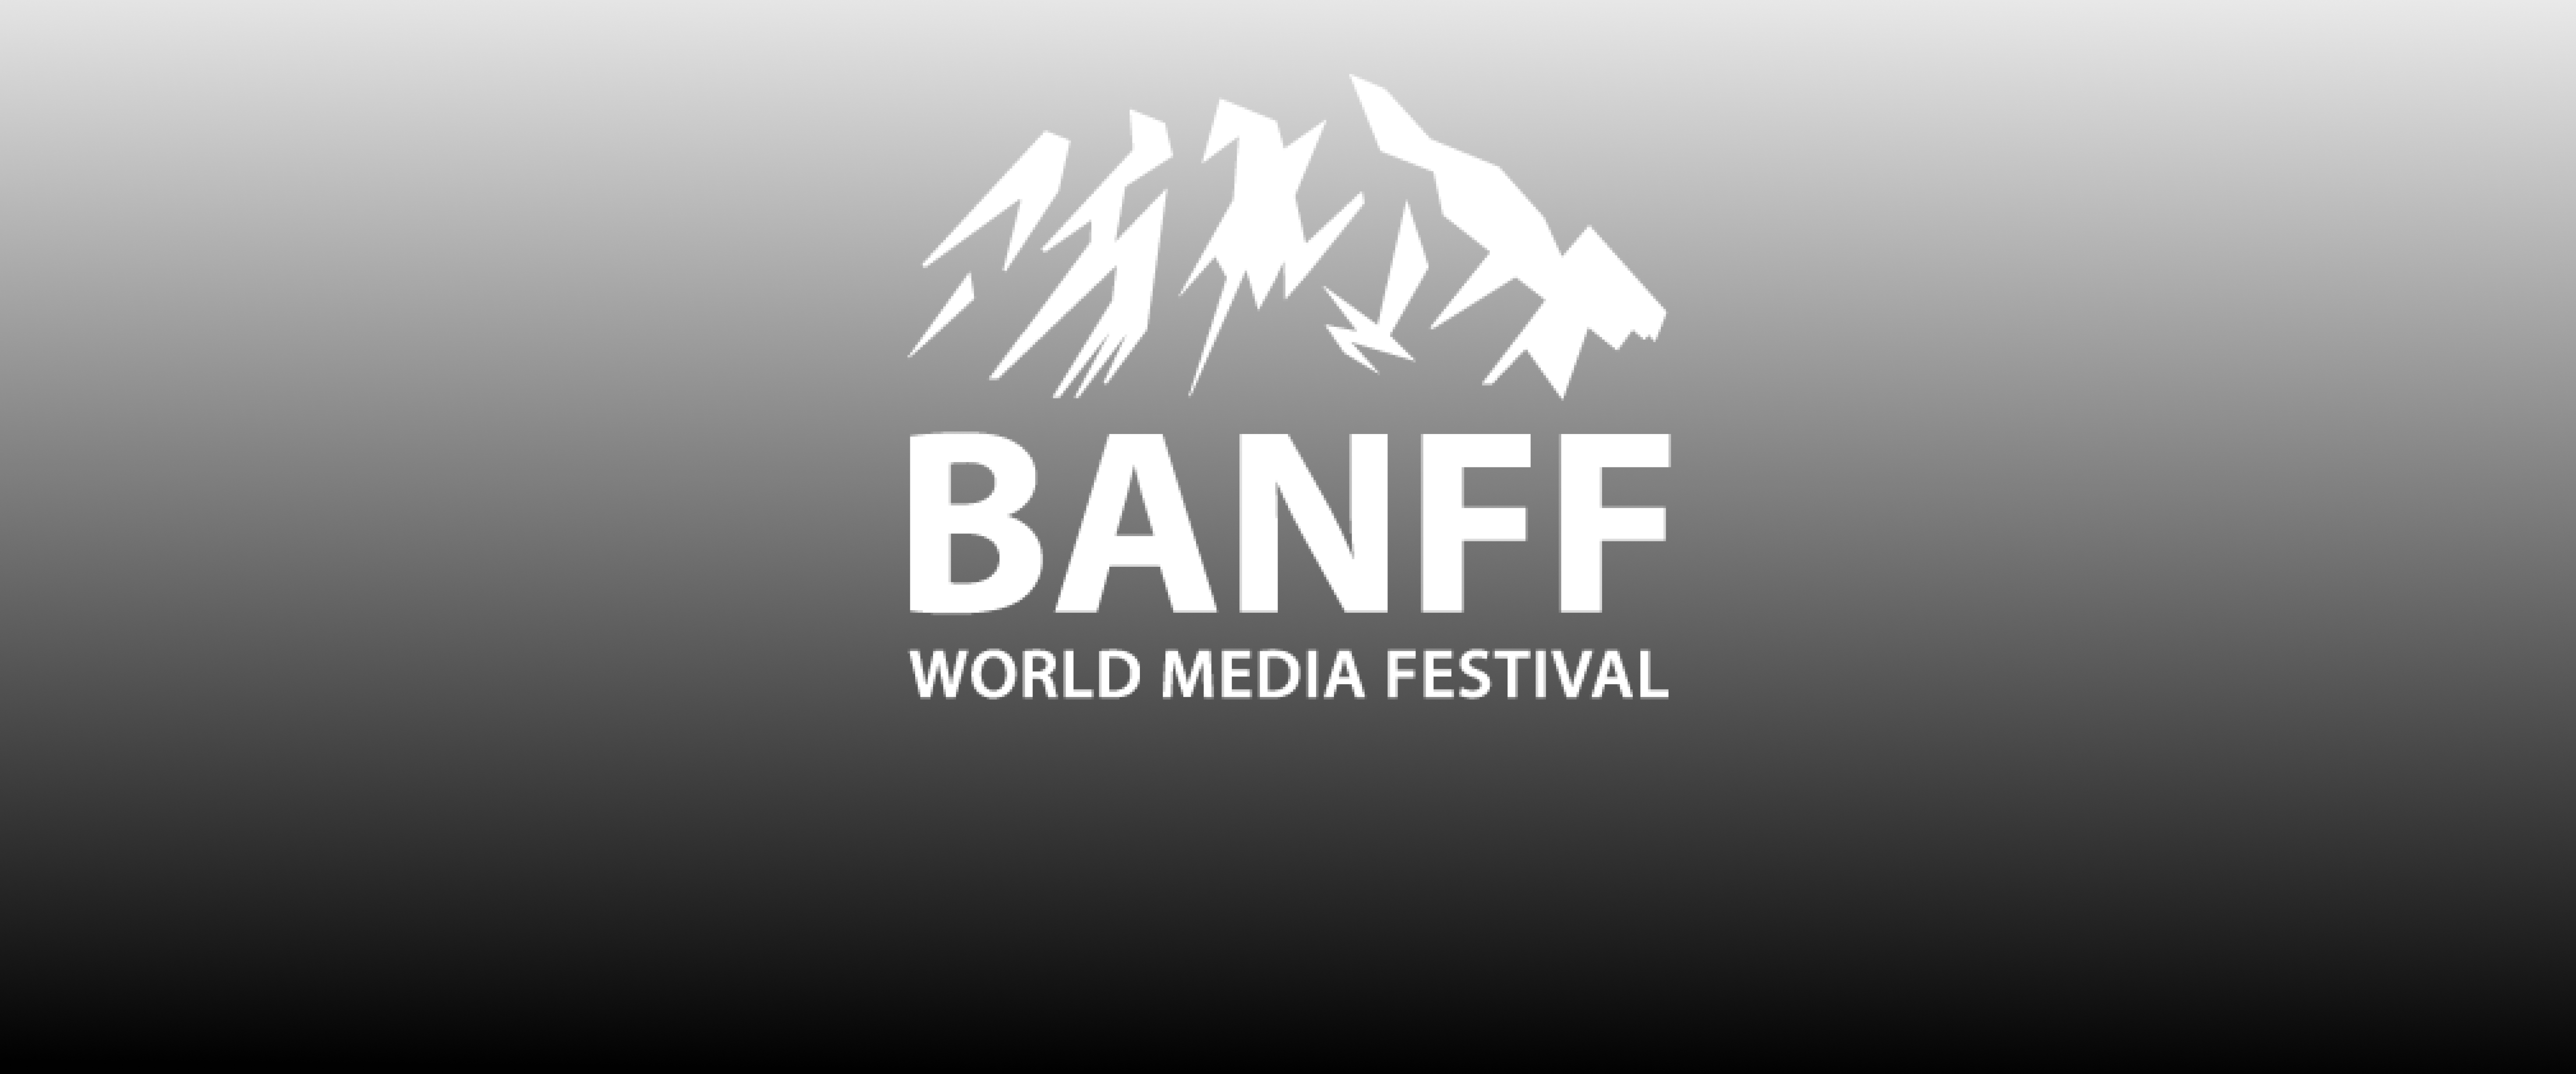 The Banff World Media Festival case study banner image